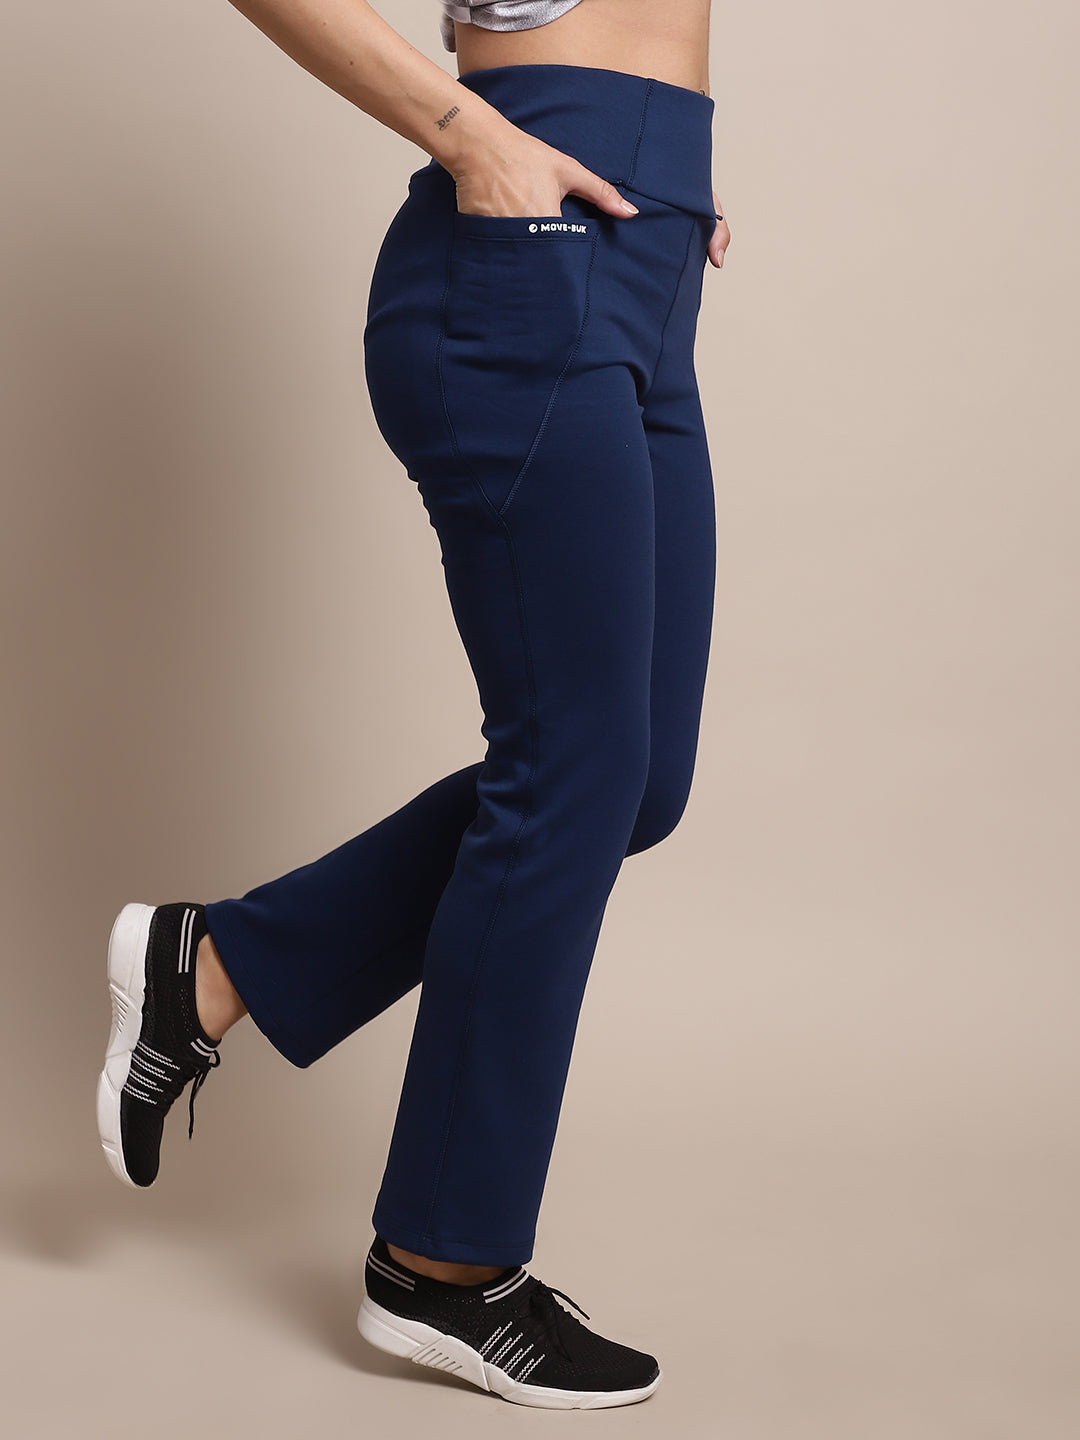 Blue Yoga Pants For Women With Pocket  bukkumstore